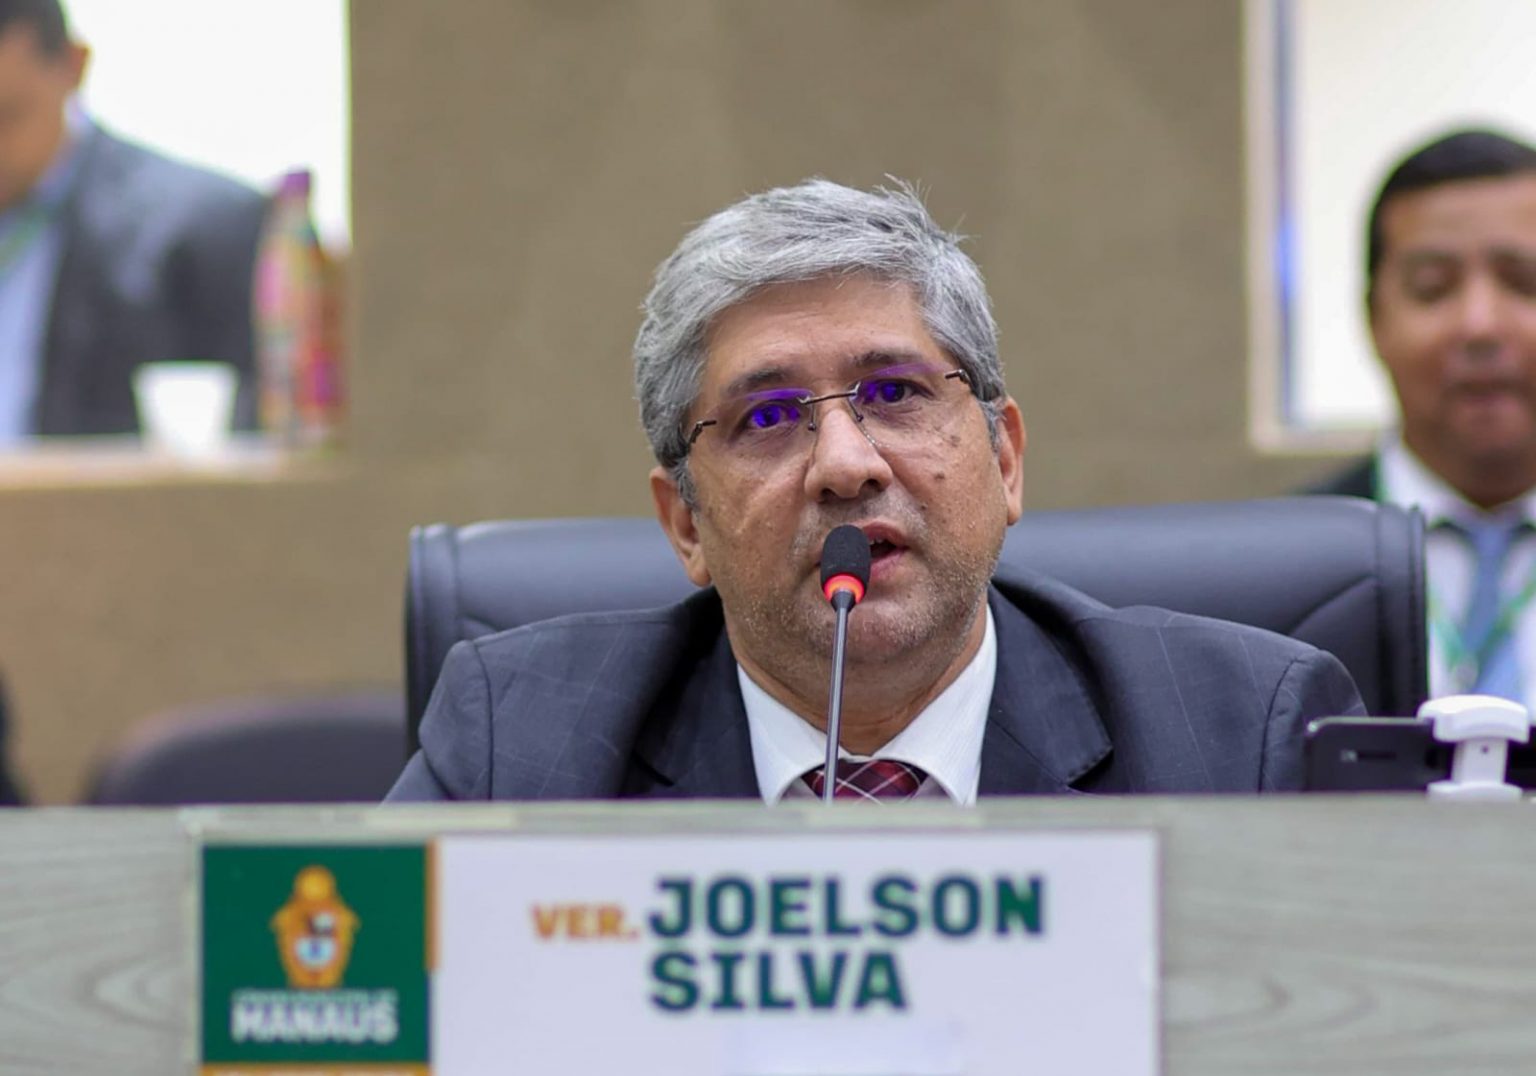 Joelson Silva 3 5Evm3o